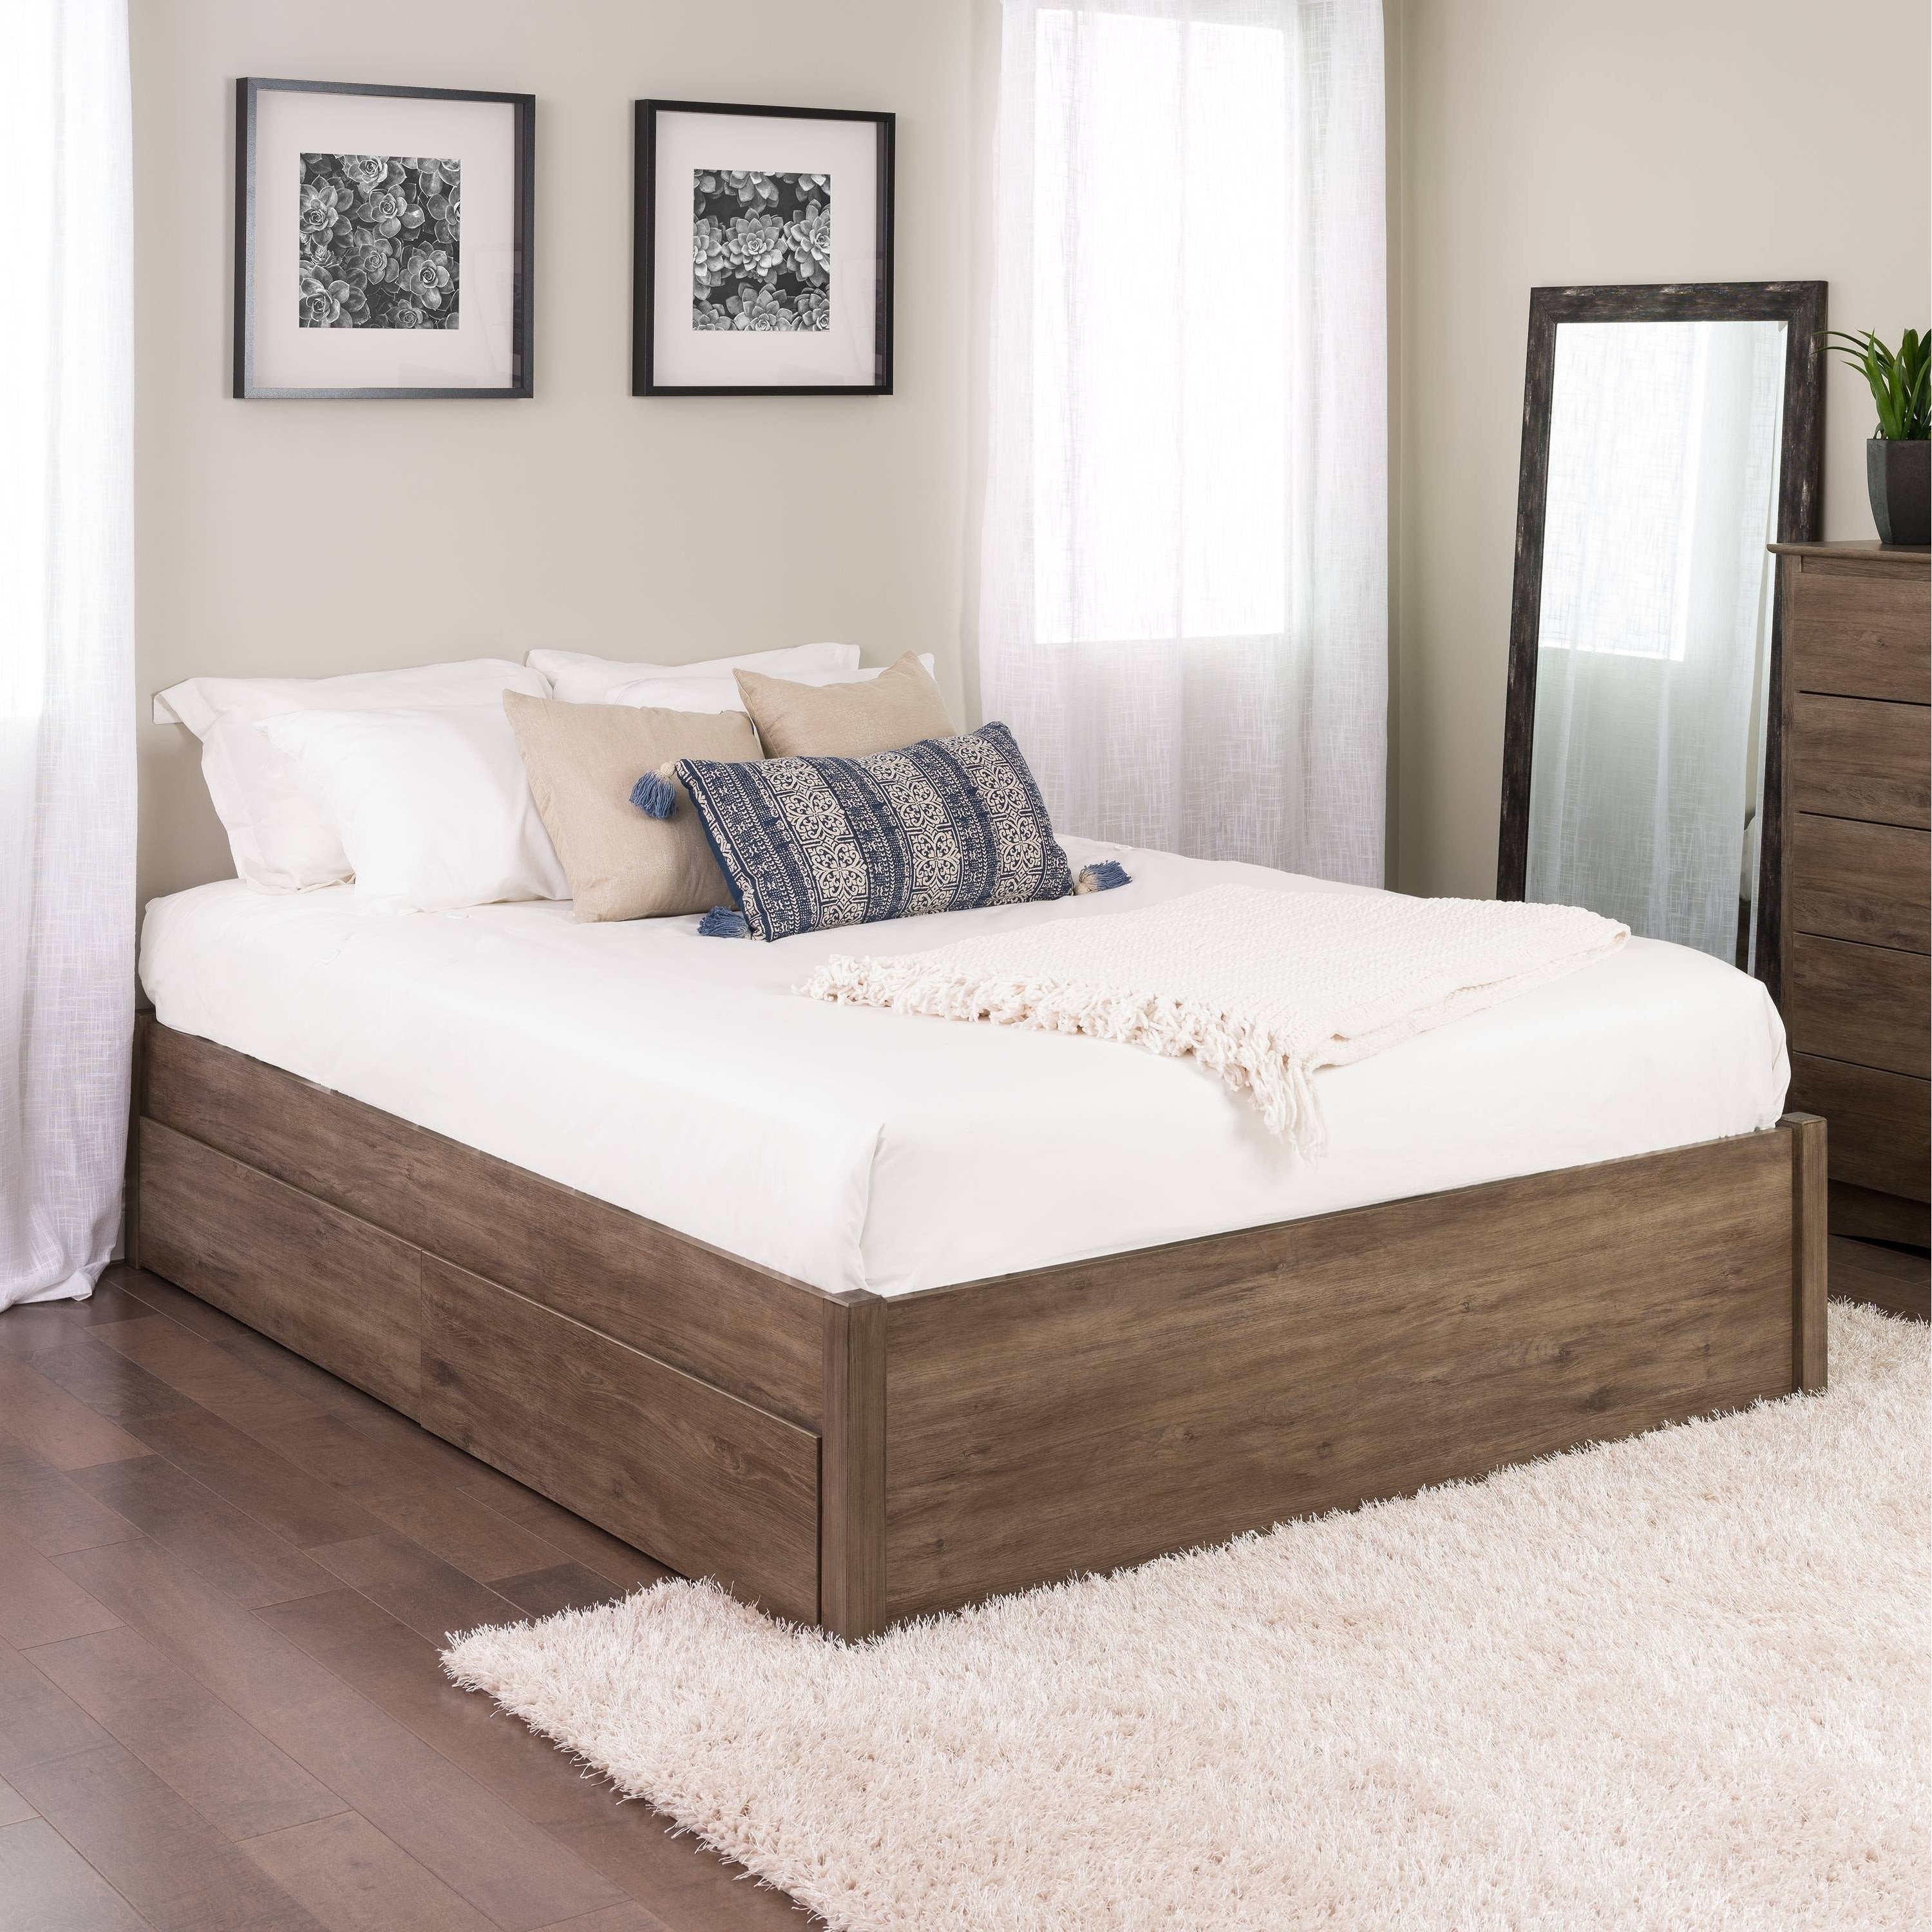 Dark Wood Bedroom Furniture Elegant Prepac Queen Select 4 Post Platform Bed with Optional Drawers